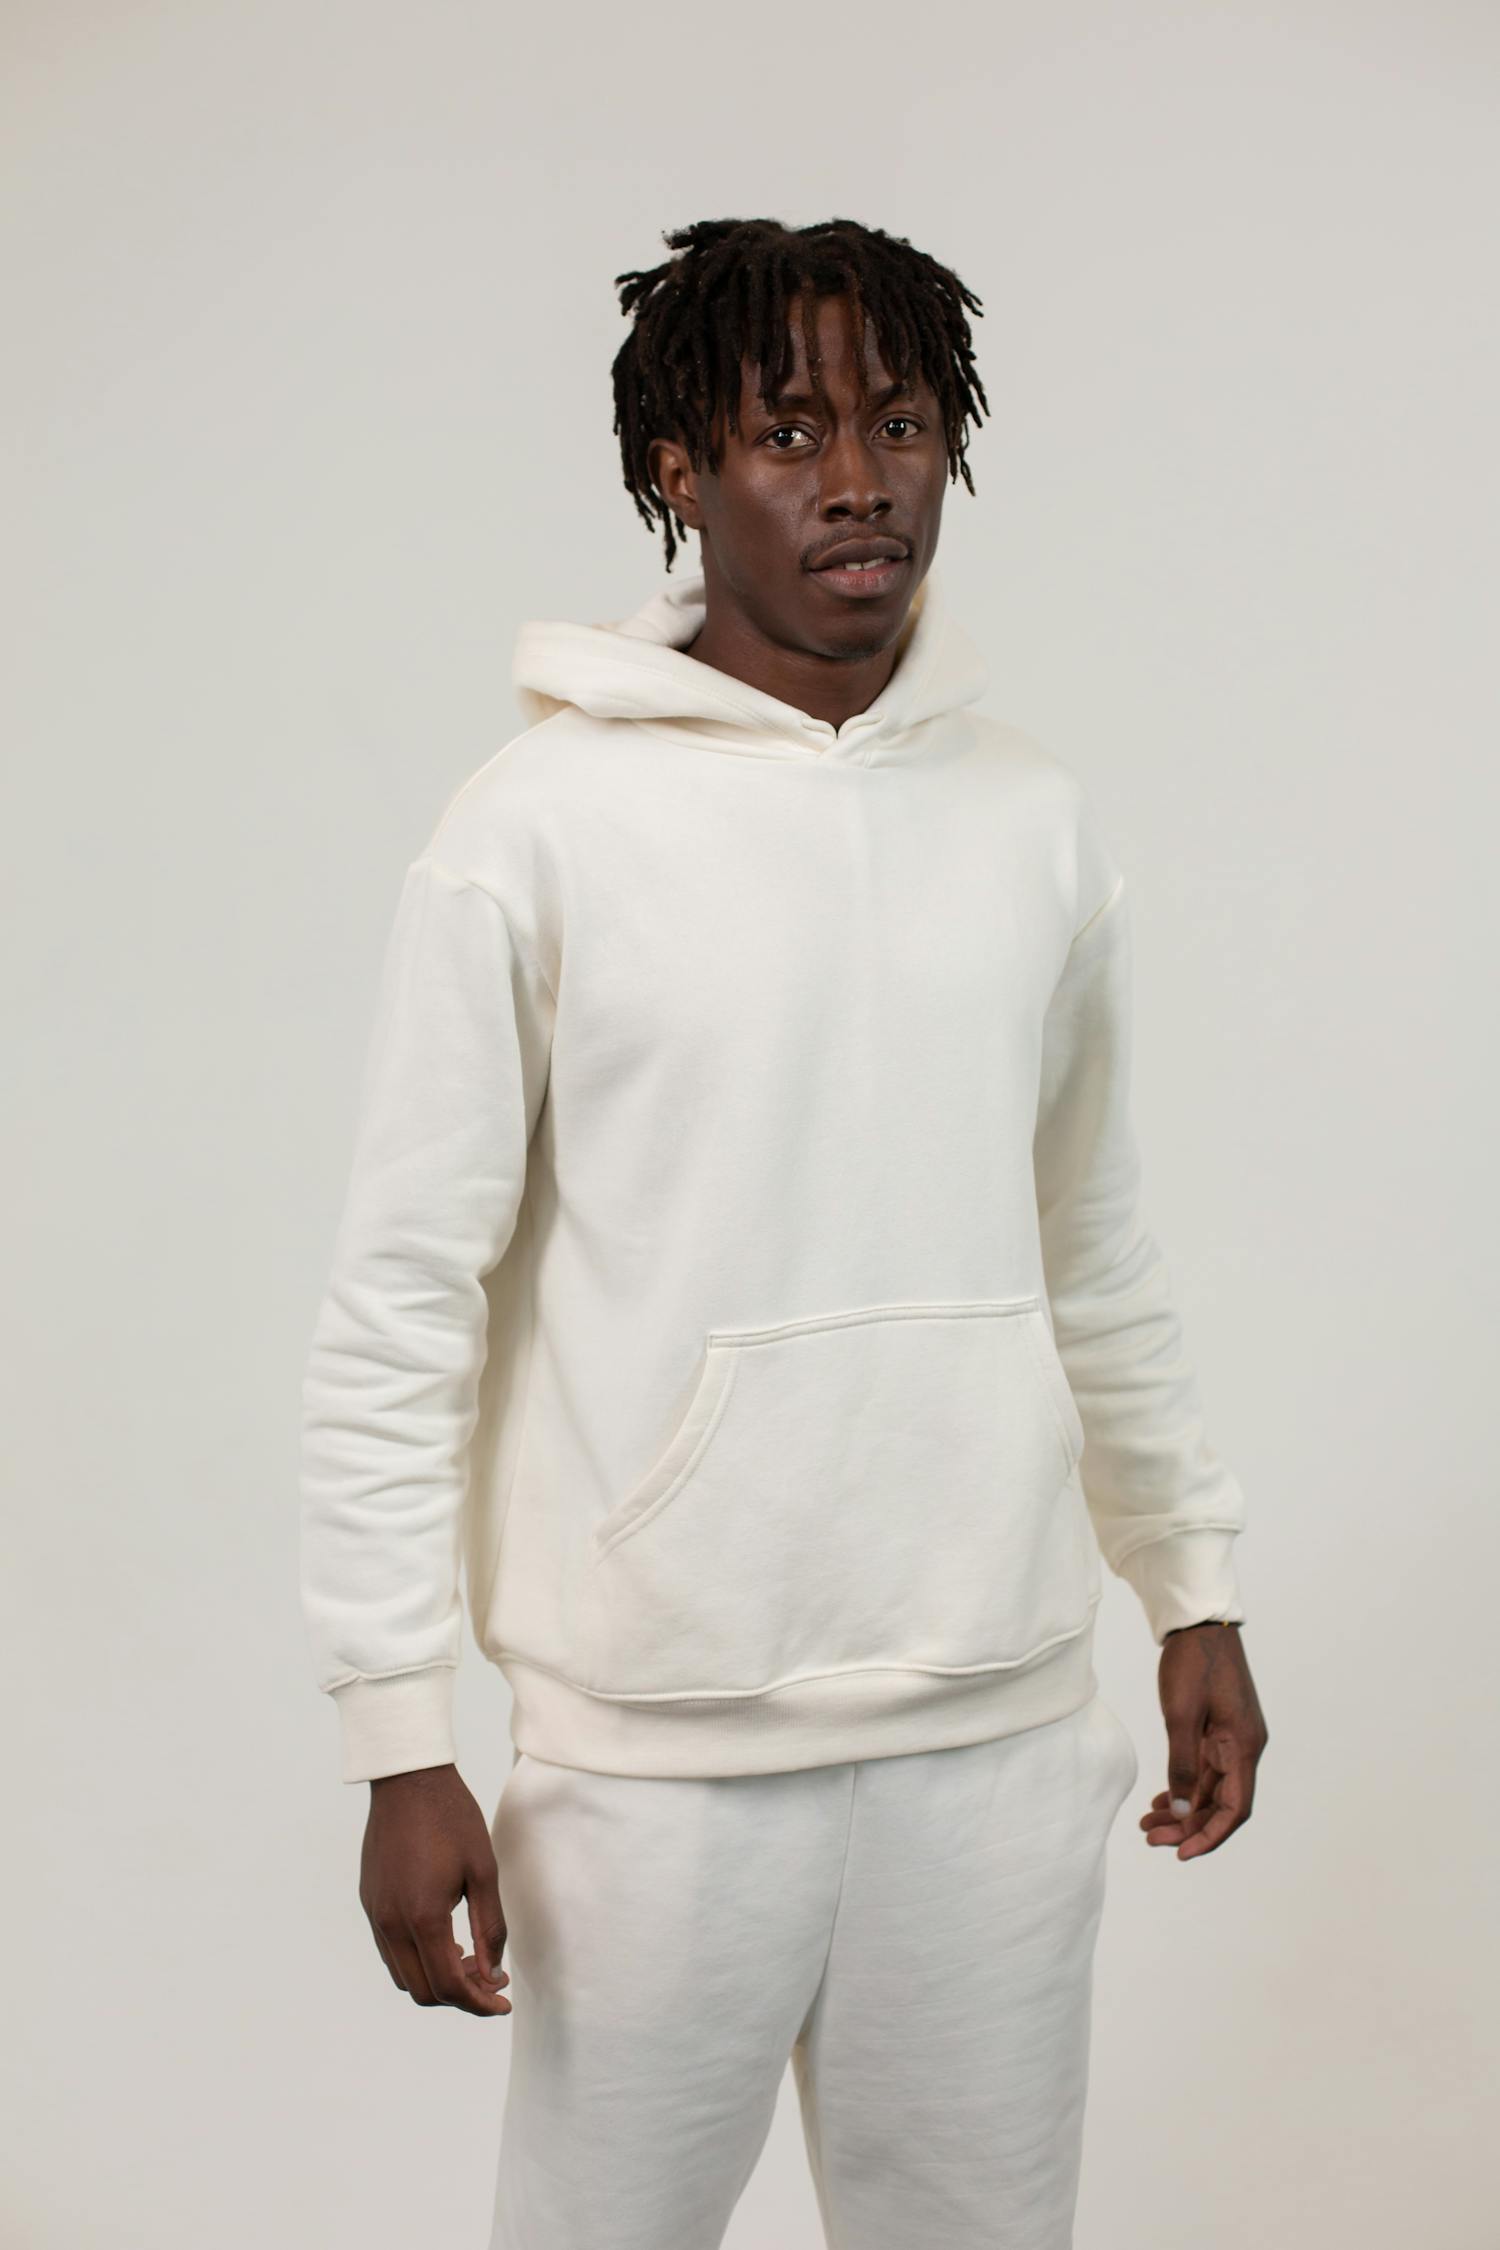 Unemotional African American man in hoodie in studio · Free Stock Photo